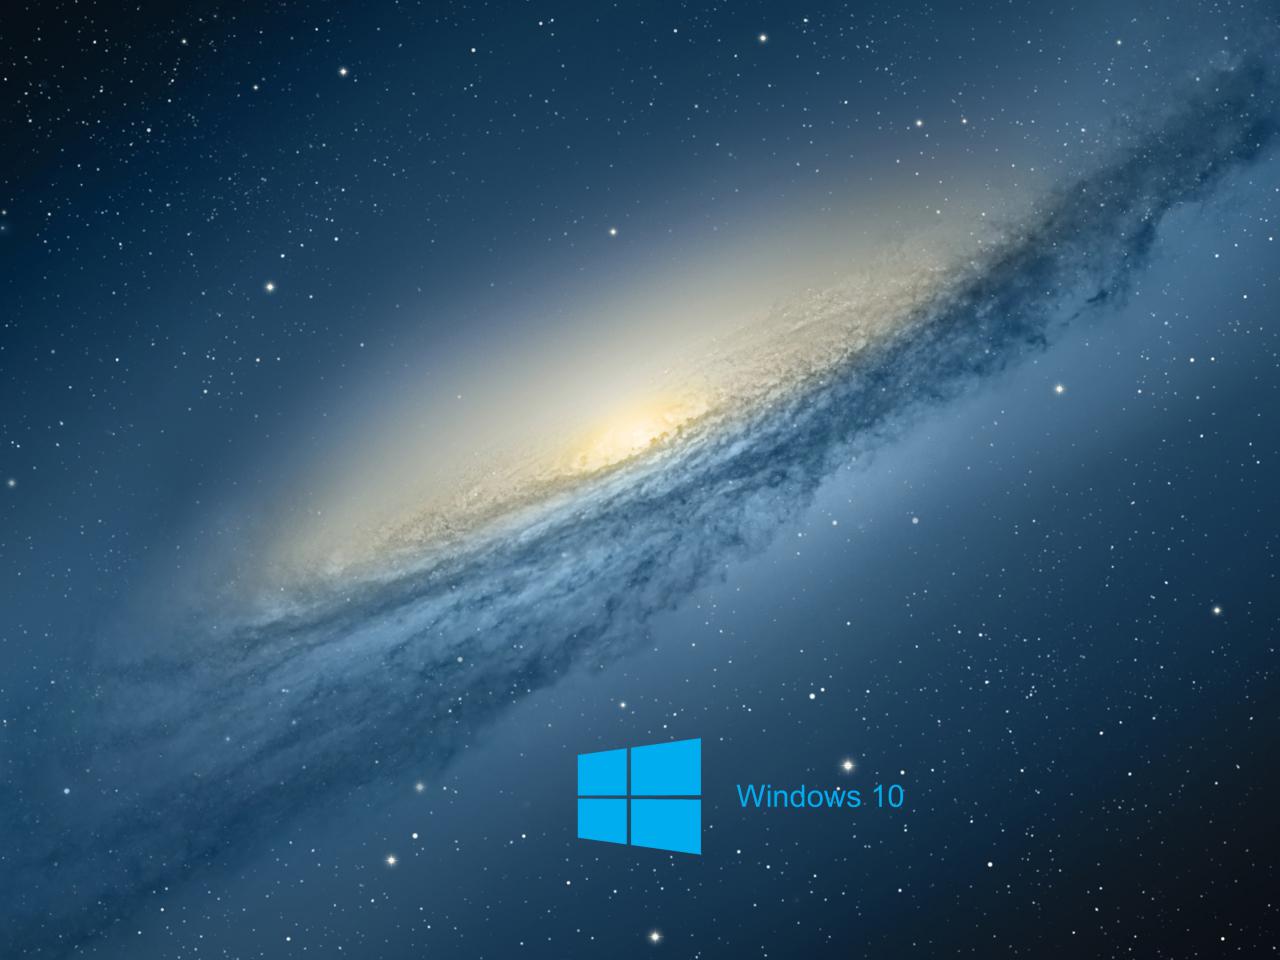 Windows 10 Desktop Background with Scientific Space Planet Galaxy